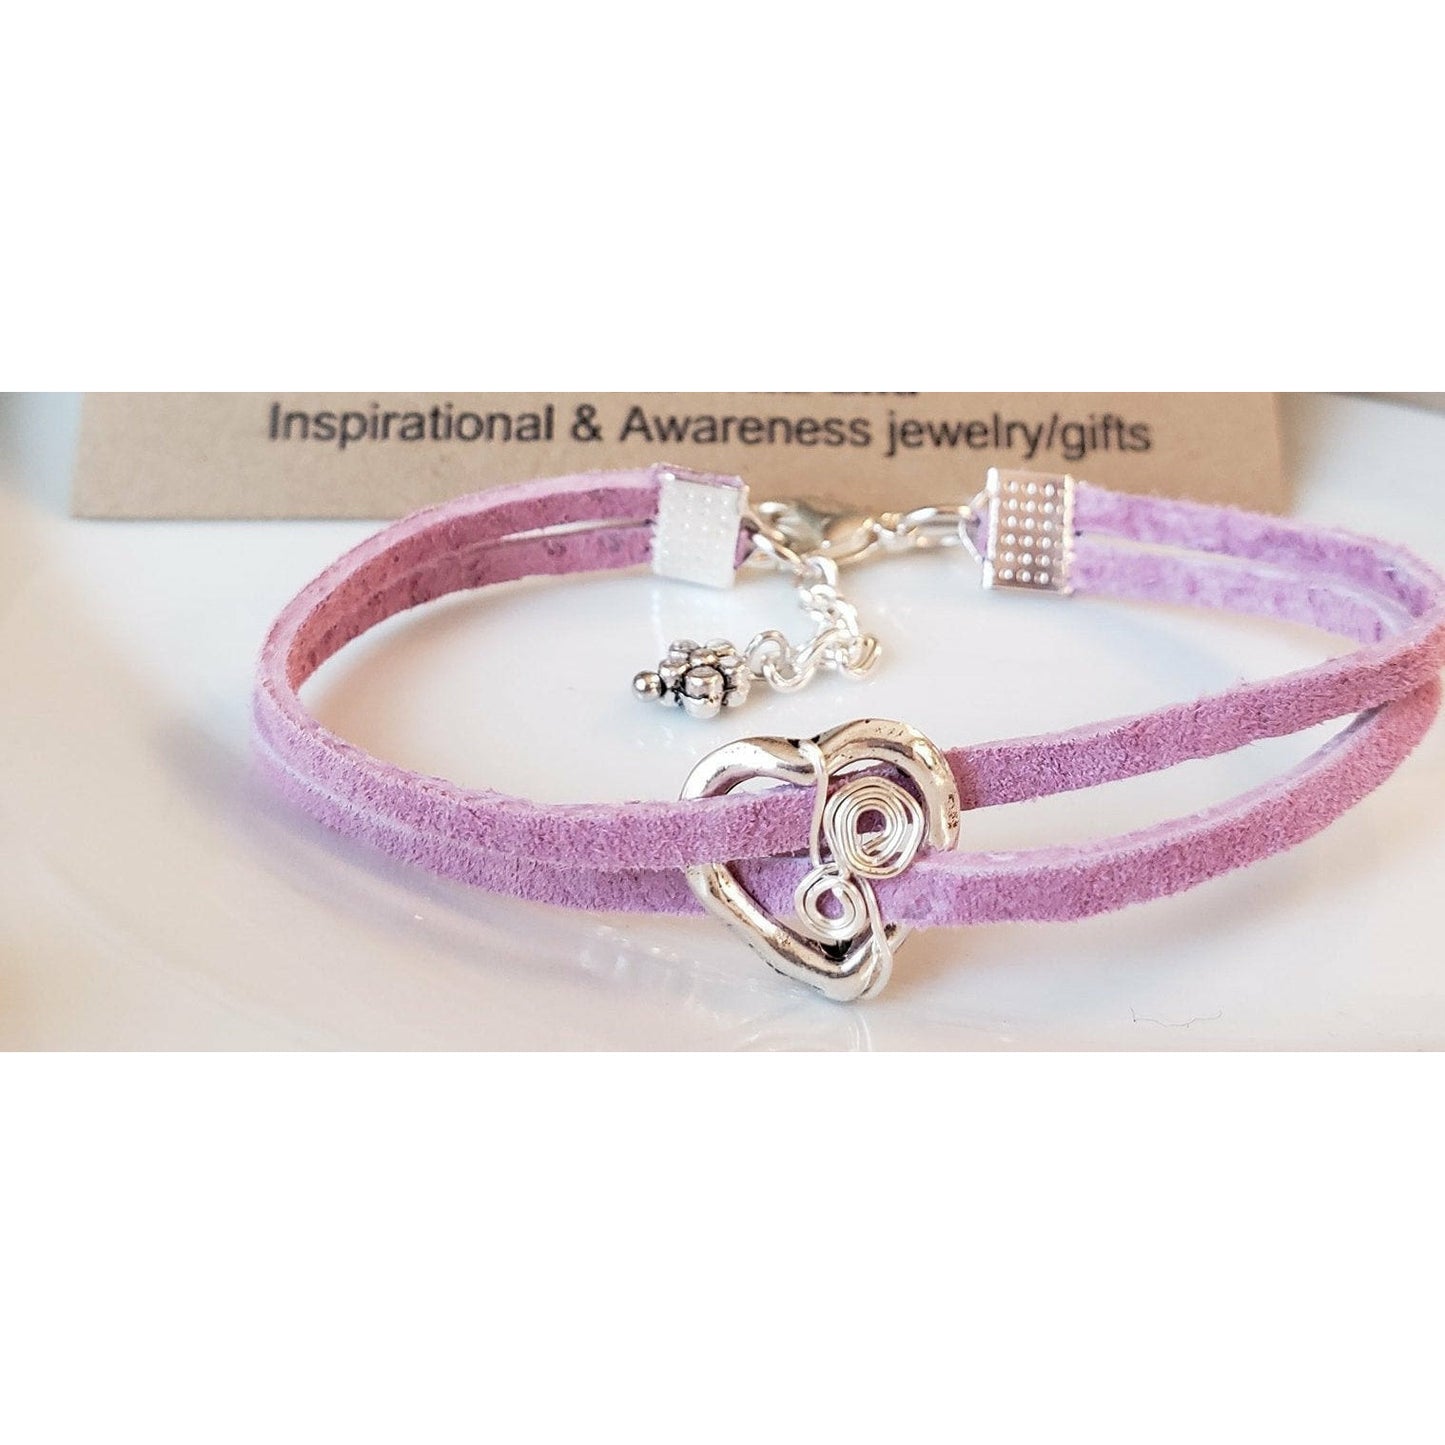 Follow Your Heart suede double strand bracelet